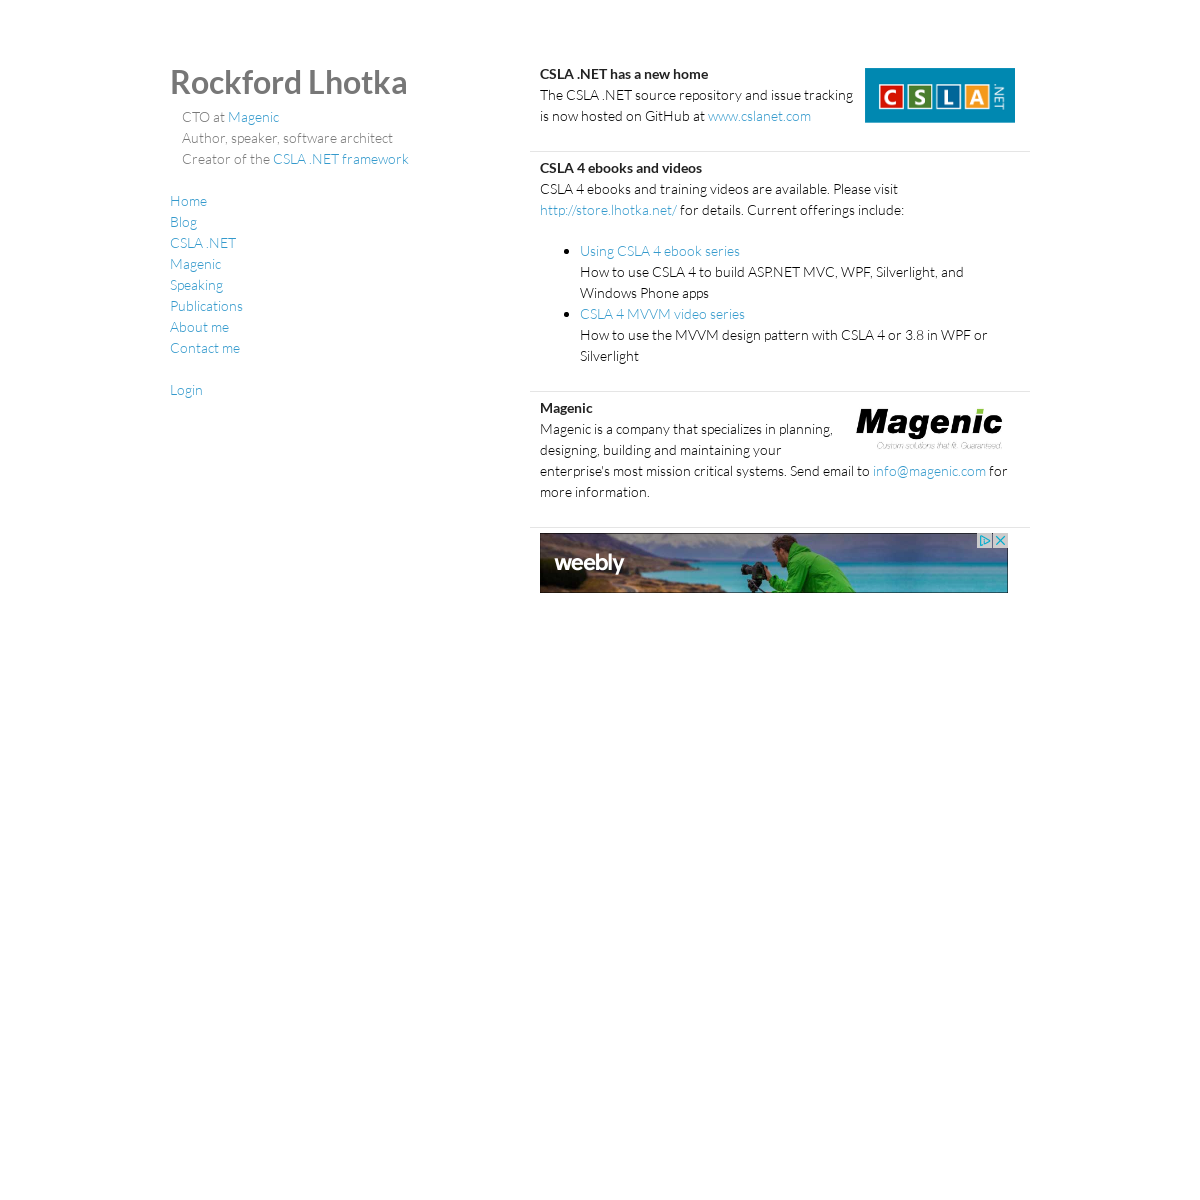 A complete backup of lhotka.net